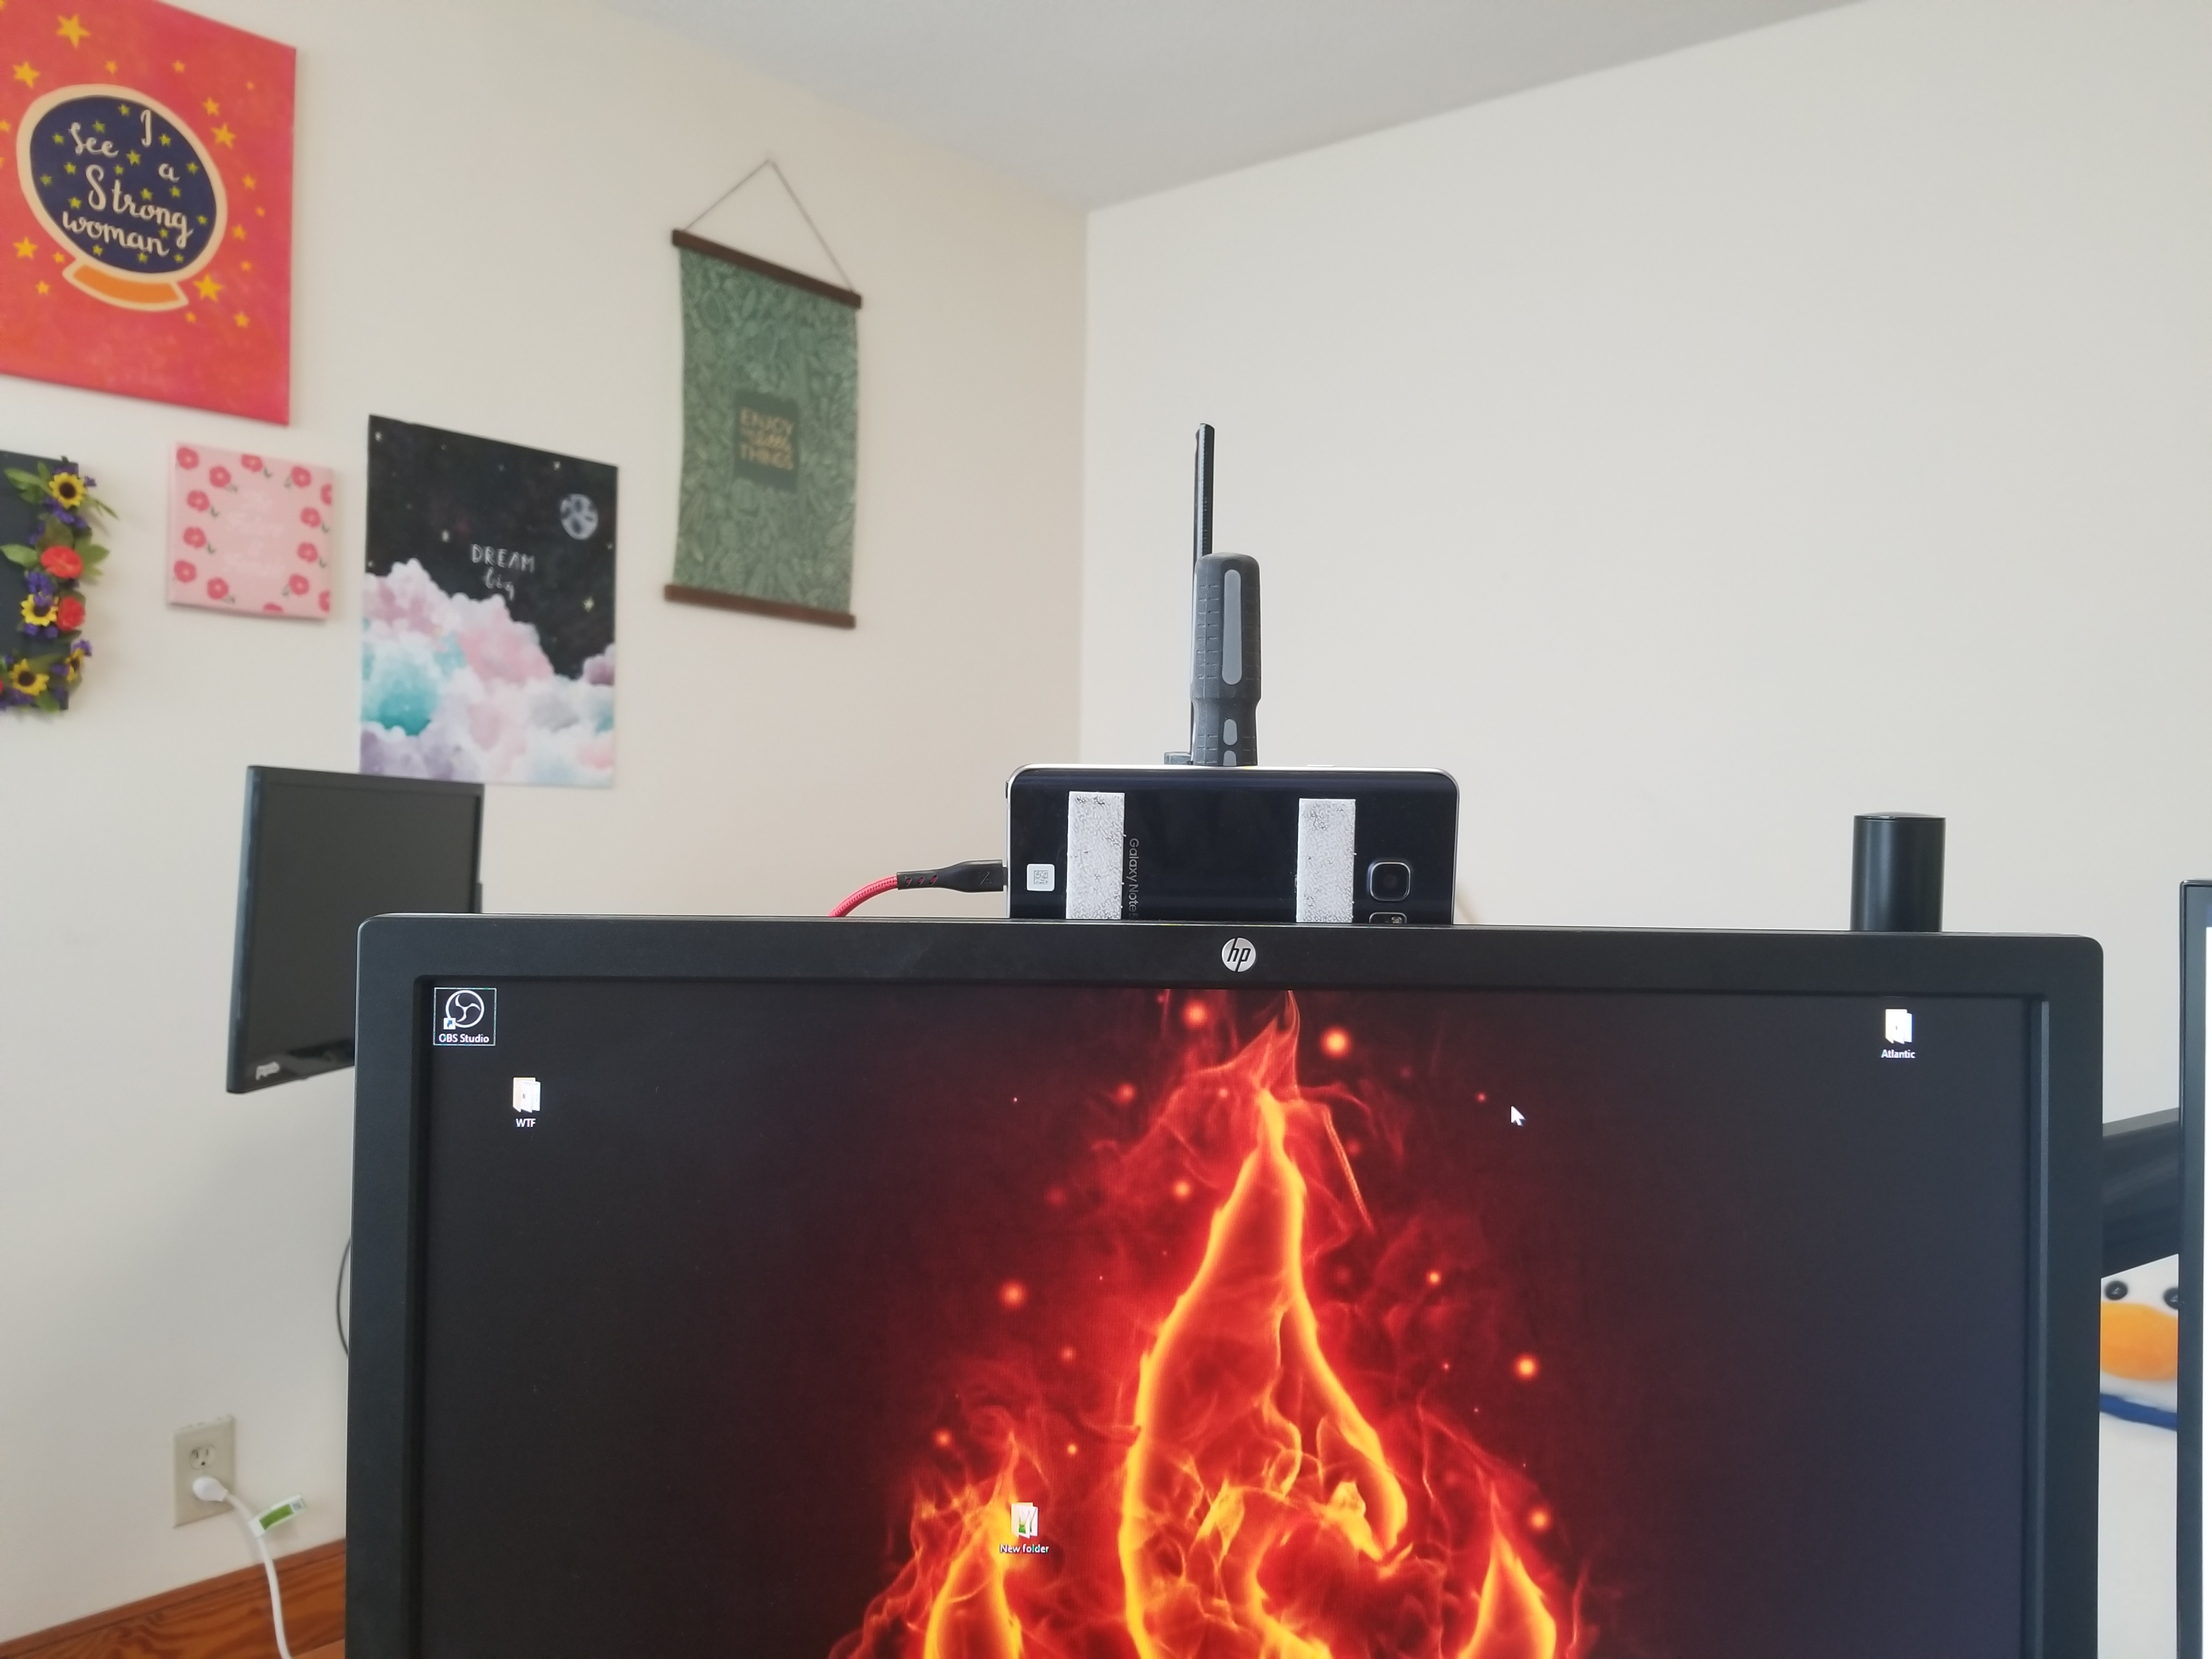 Old monitor setup